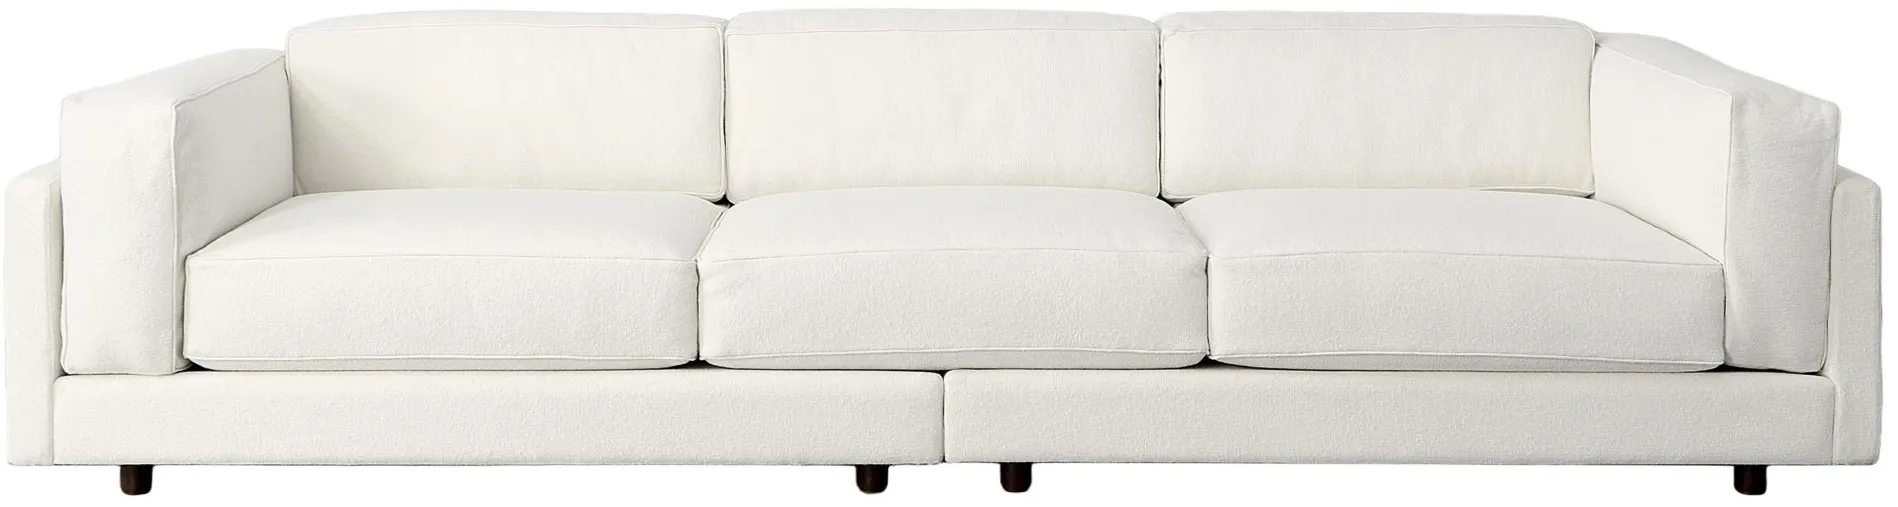 Colette Sofa in WHITE by Bellanest